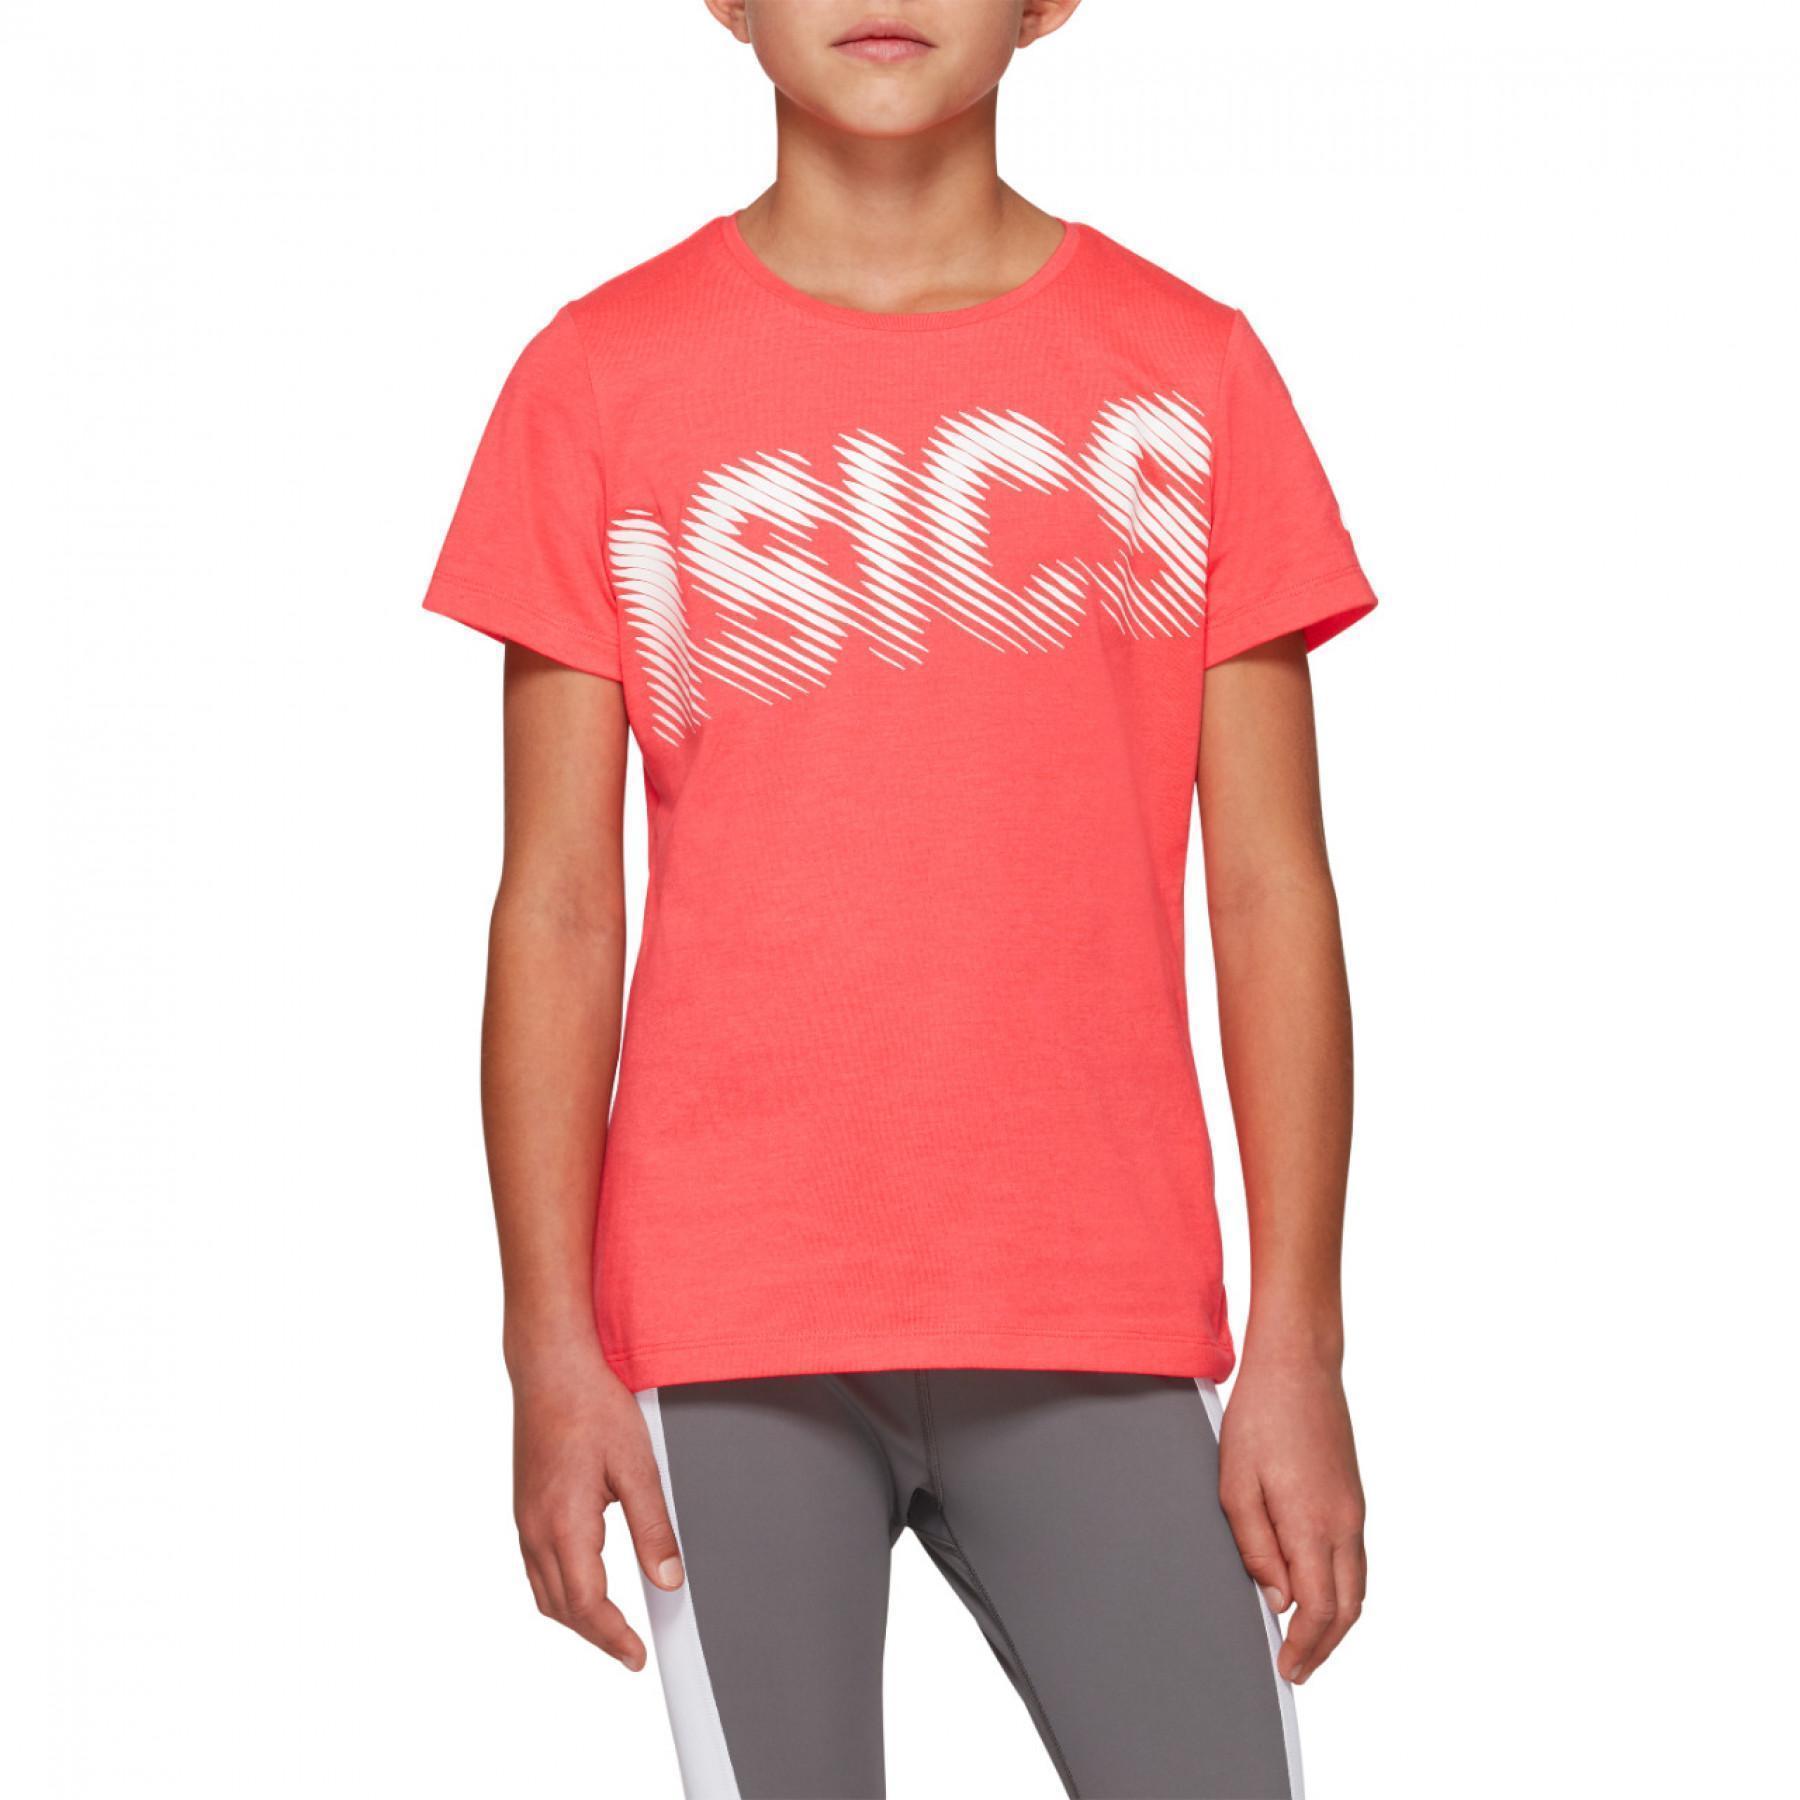 Children's T-shirt Asics G Gpx T